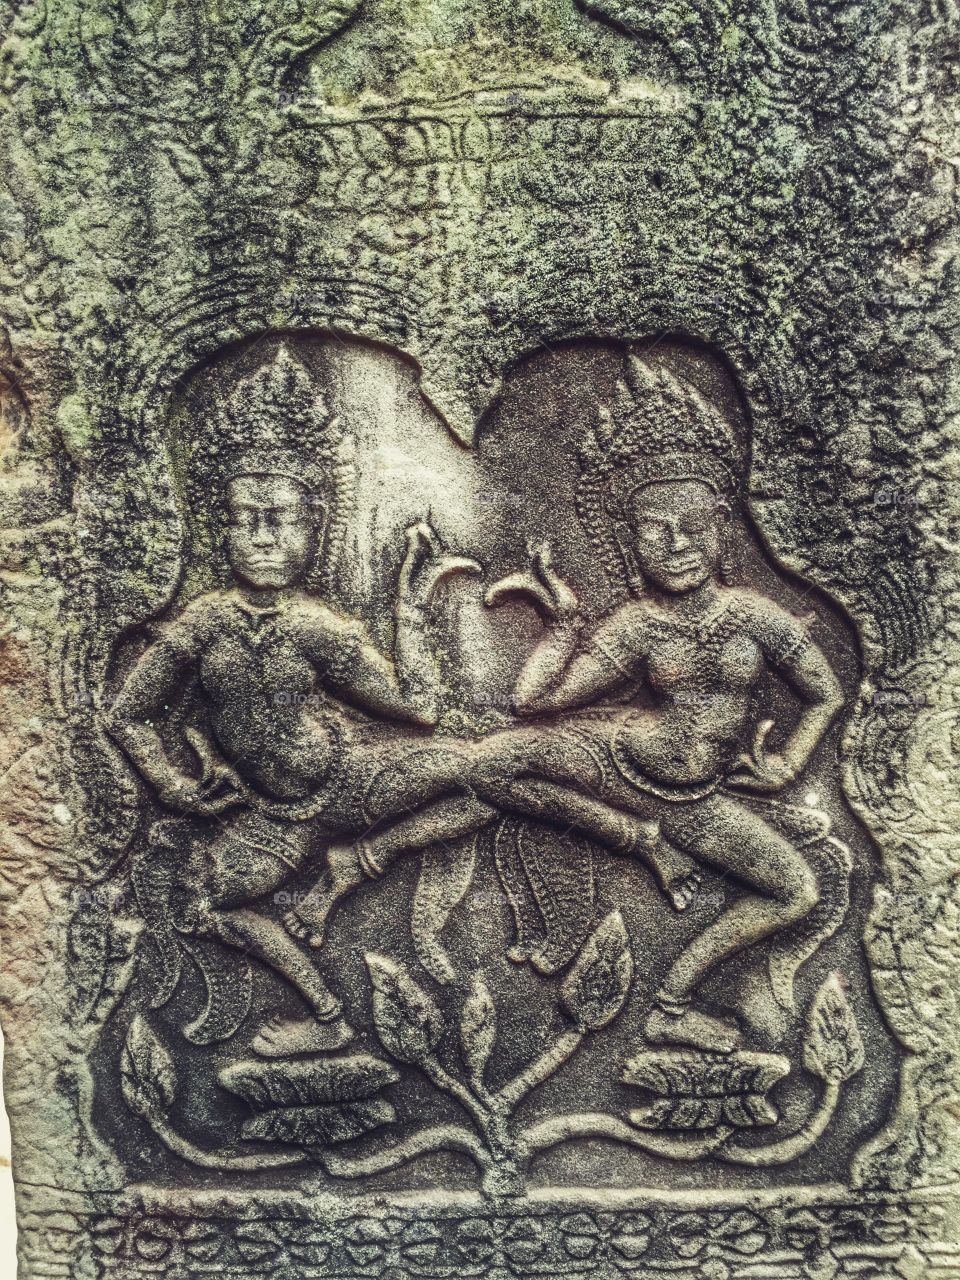 Dancing ladies ancient Hindu crafting 